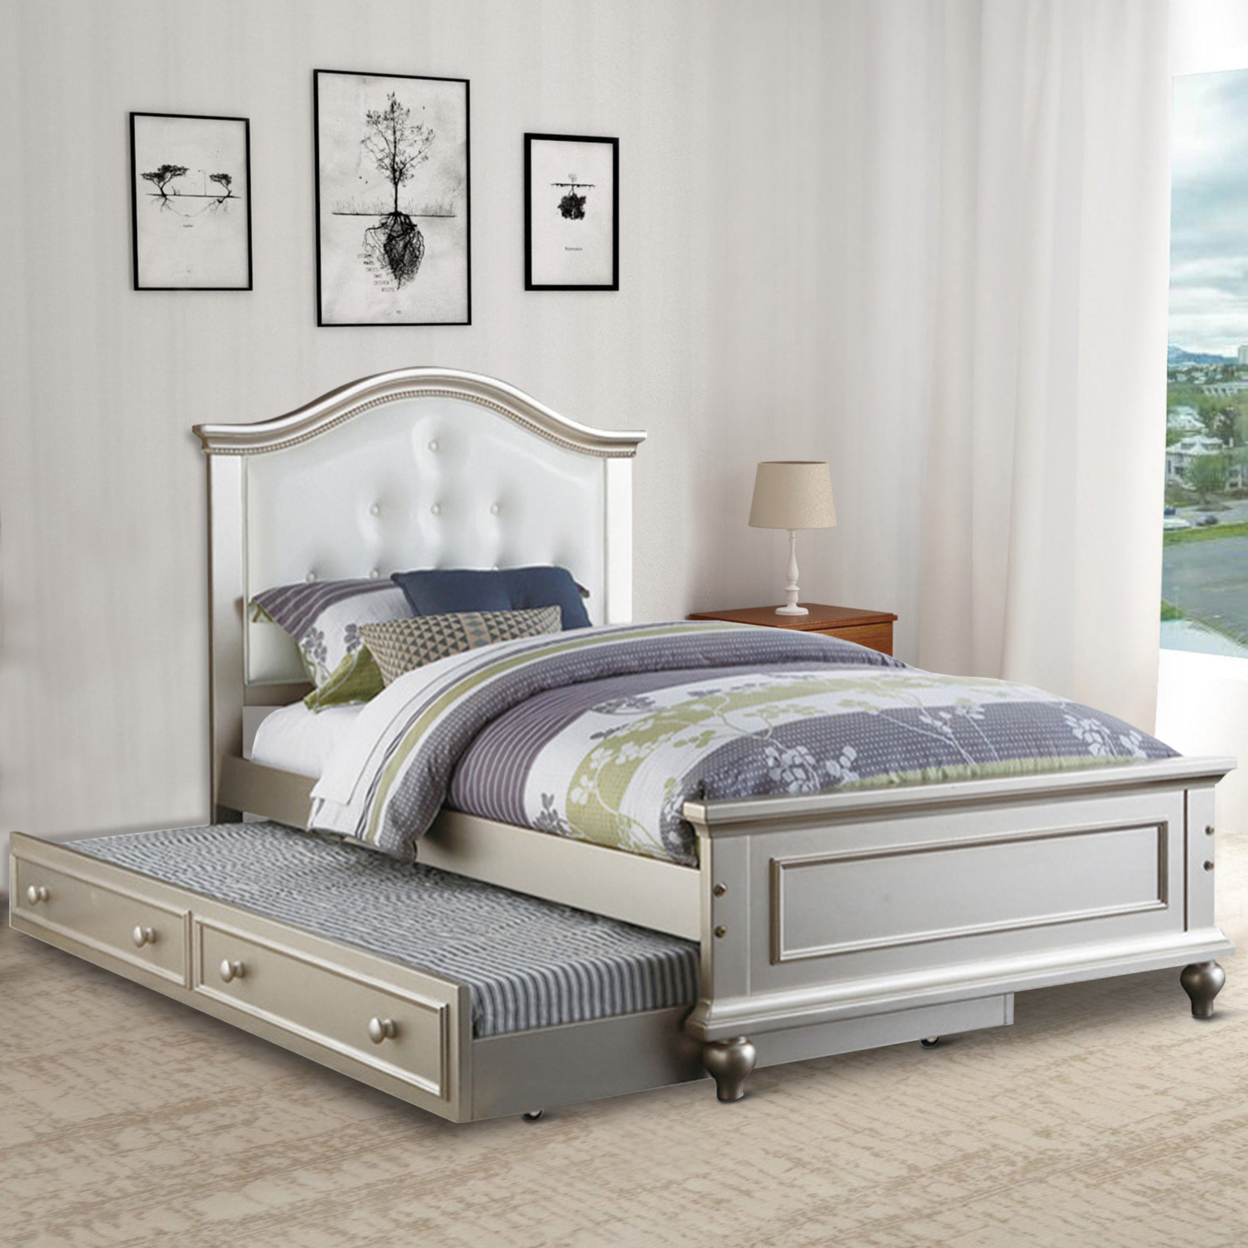 Saltoro Sherpi Cherub Twin Size Bed With Trundle In Silver And White - Saltoro Sherpi